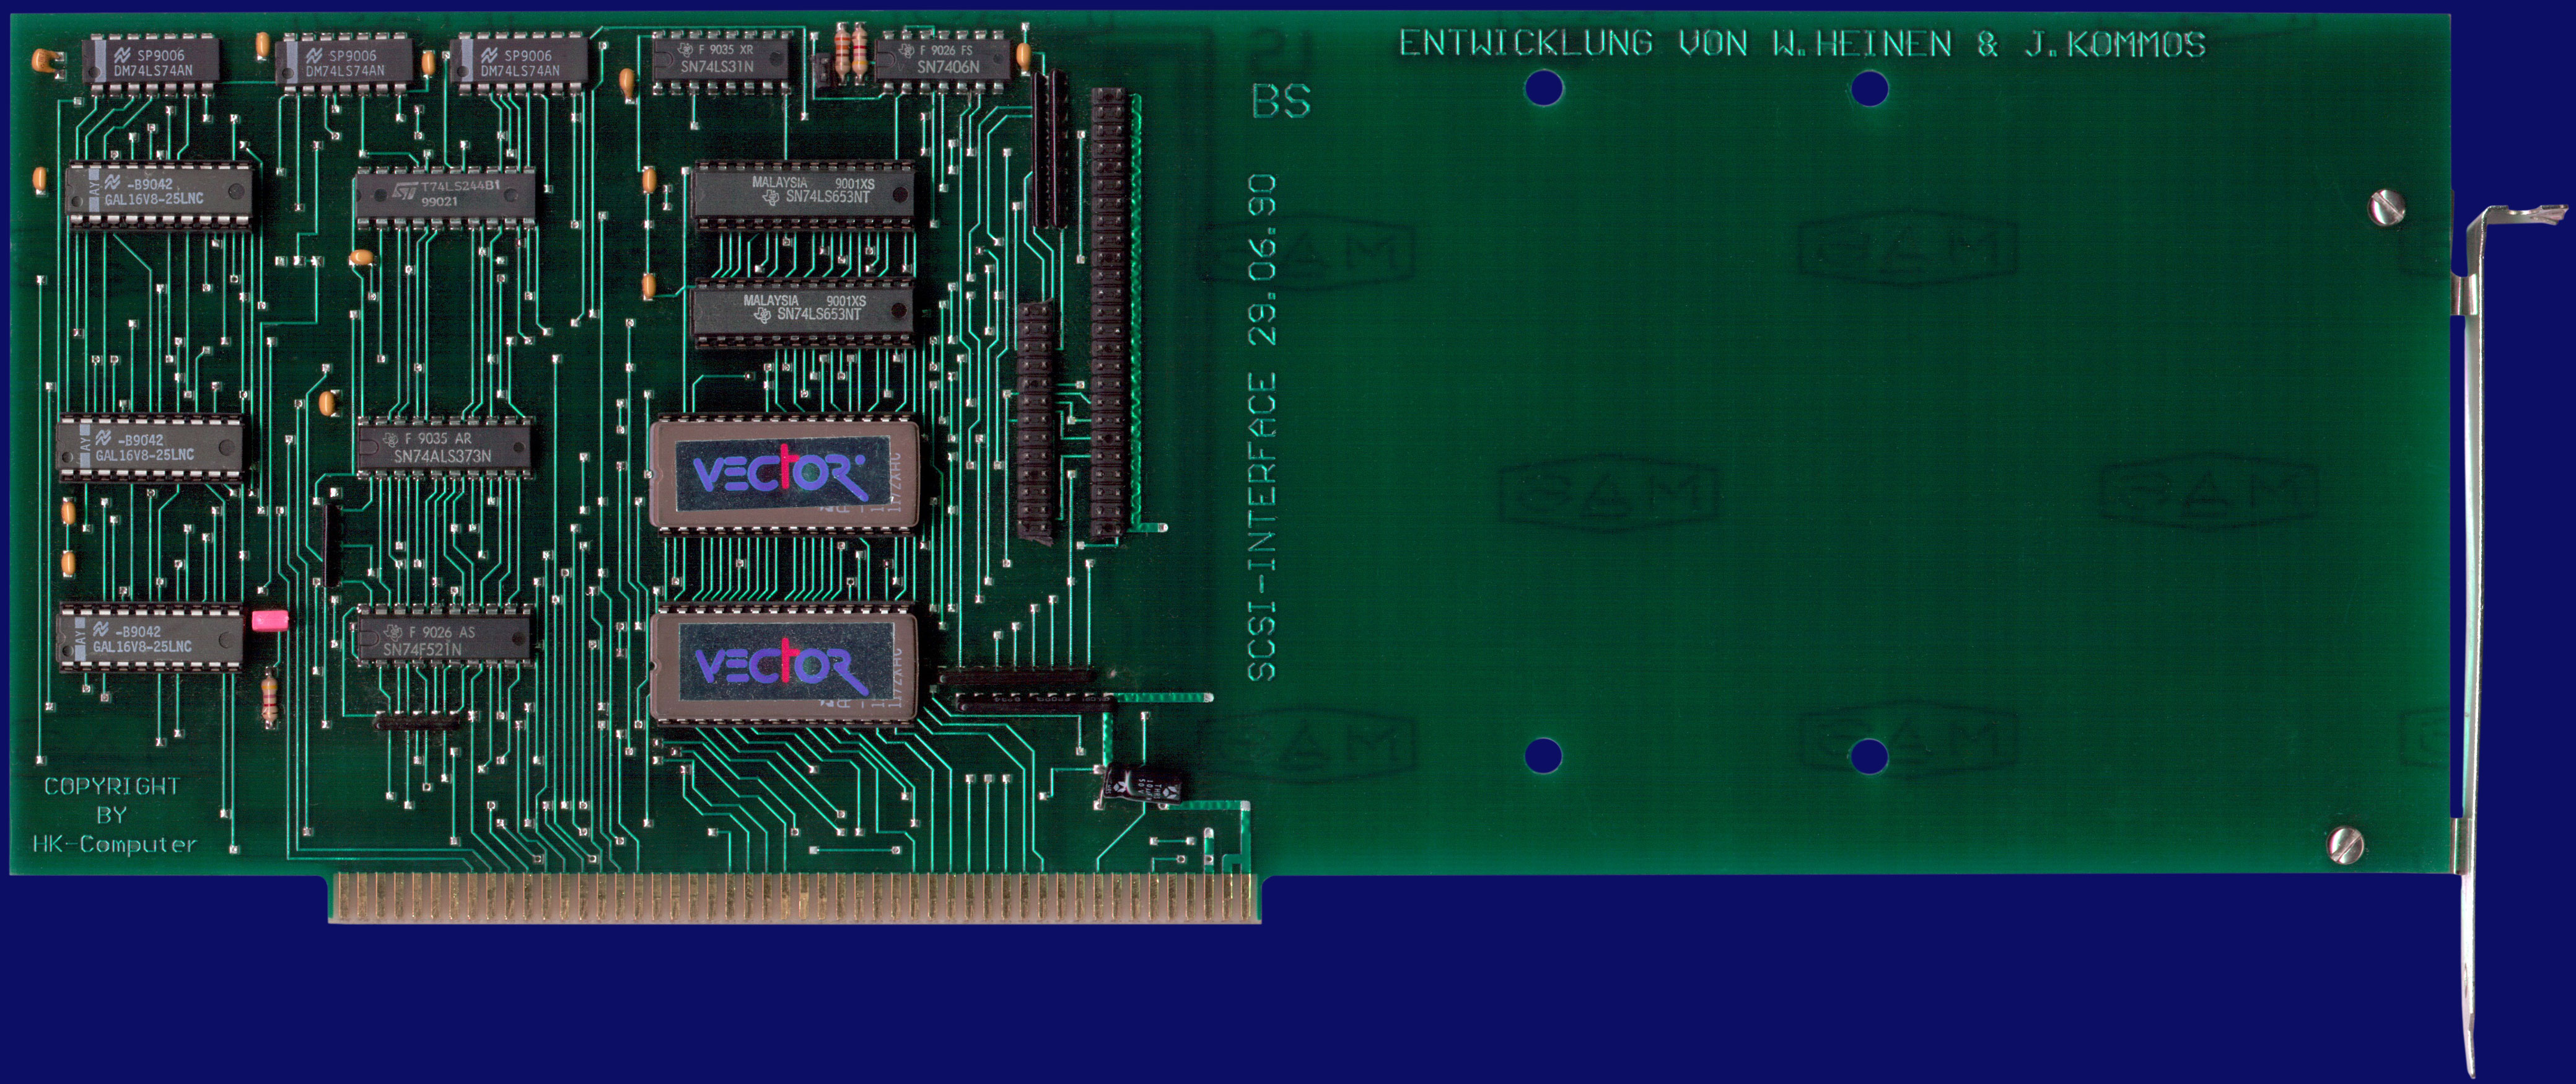 HK-Computer Vector SCSI & Professional SCSI - front side